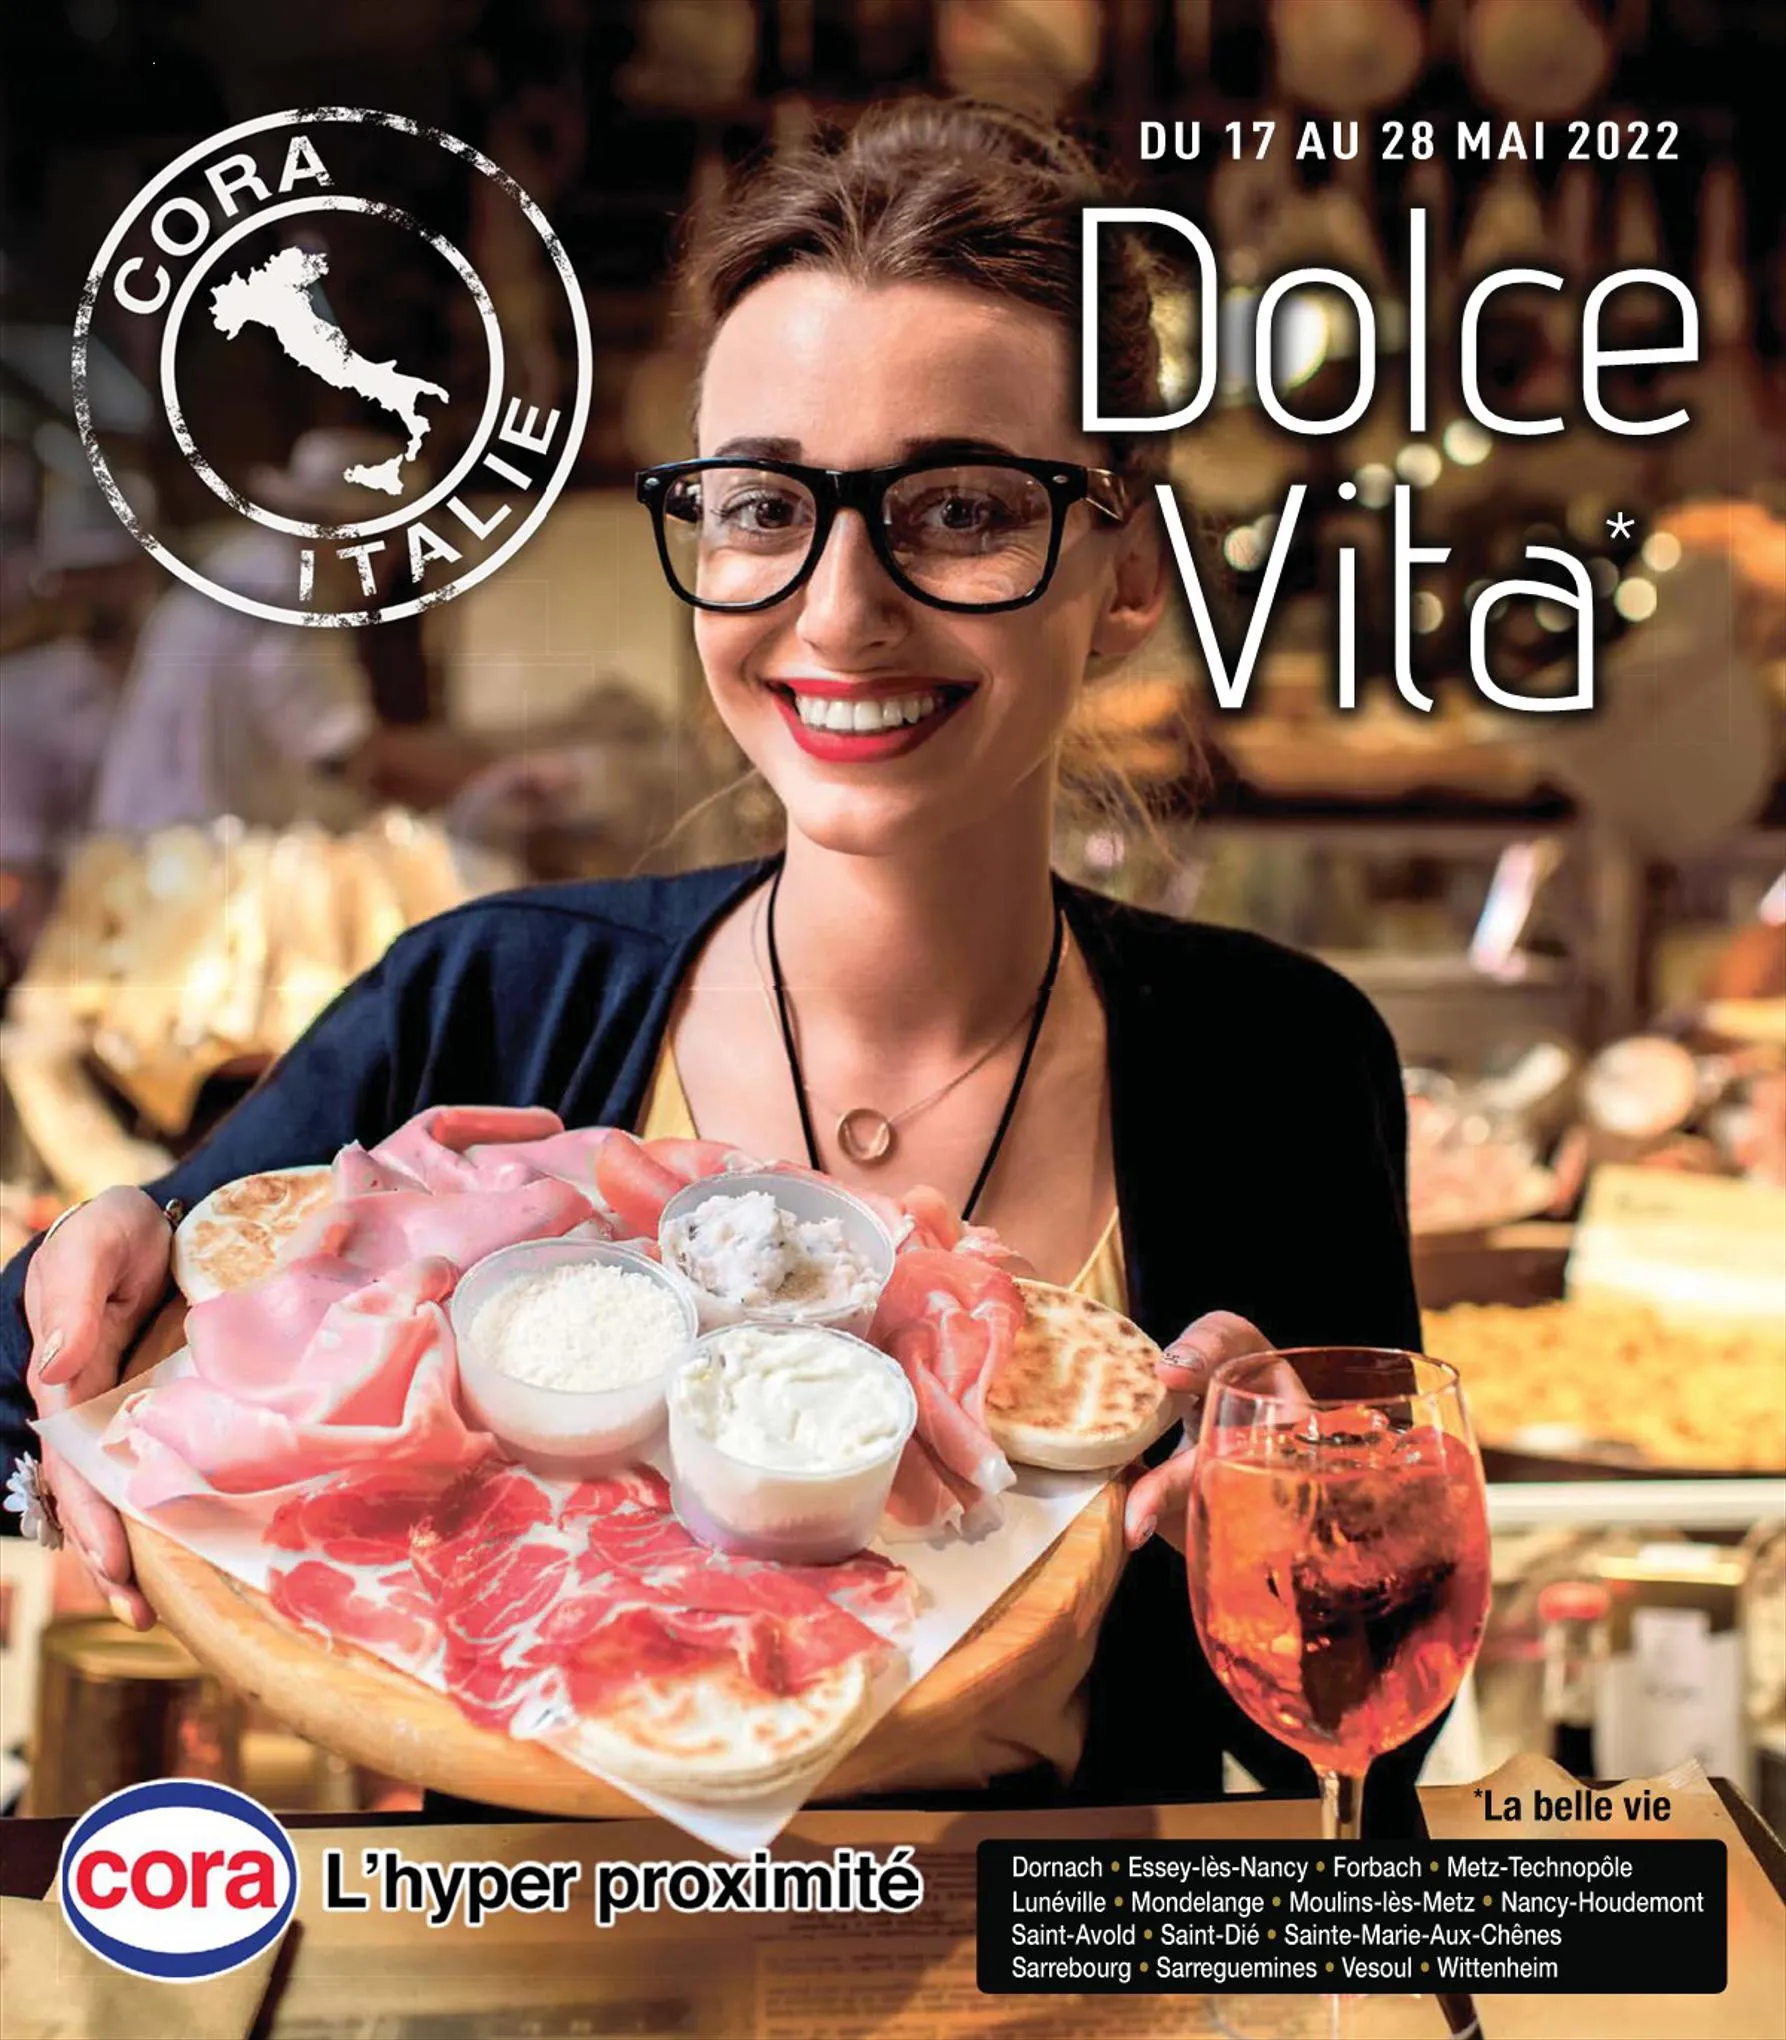 Catalogue Dolce vita, page 00001